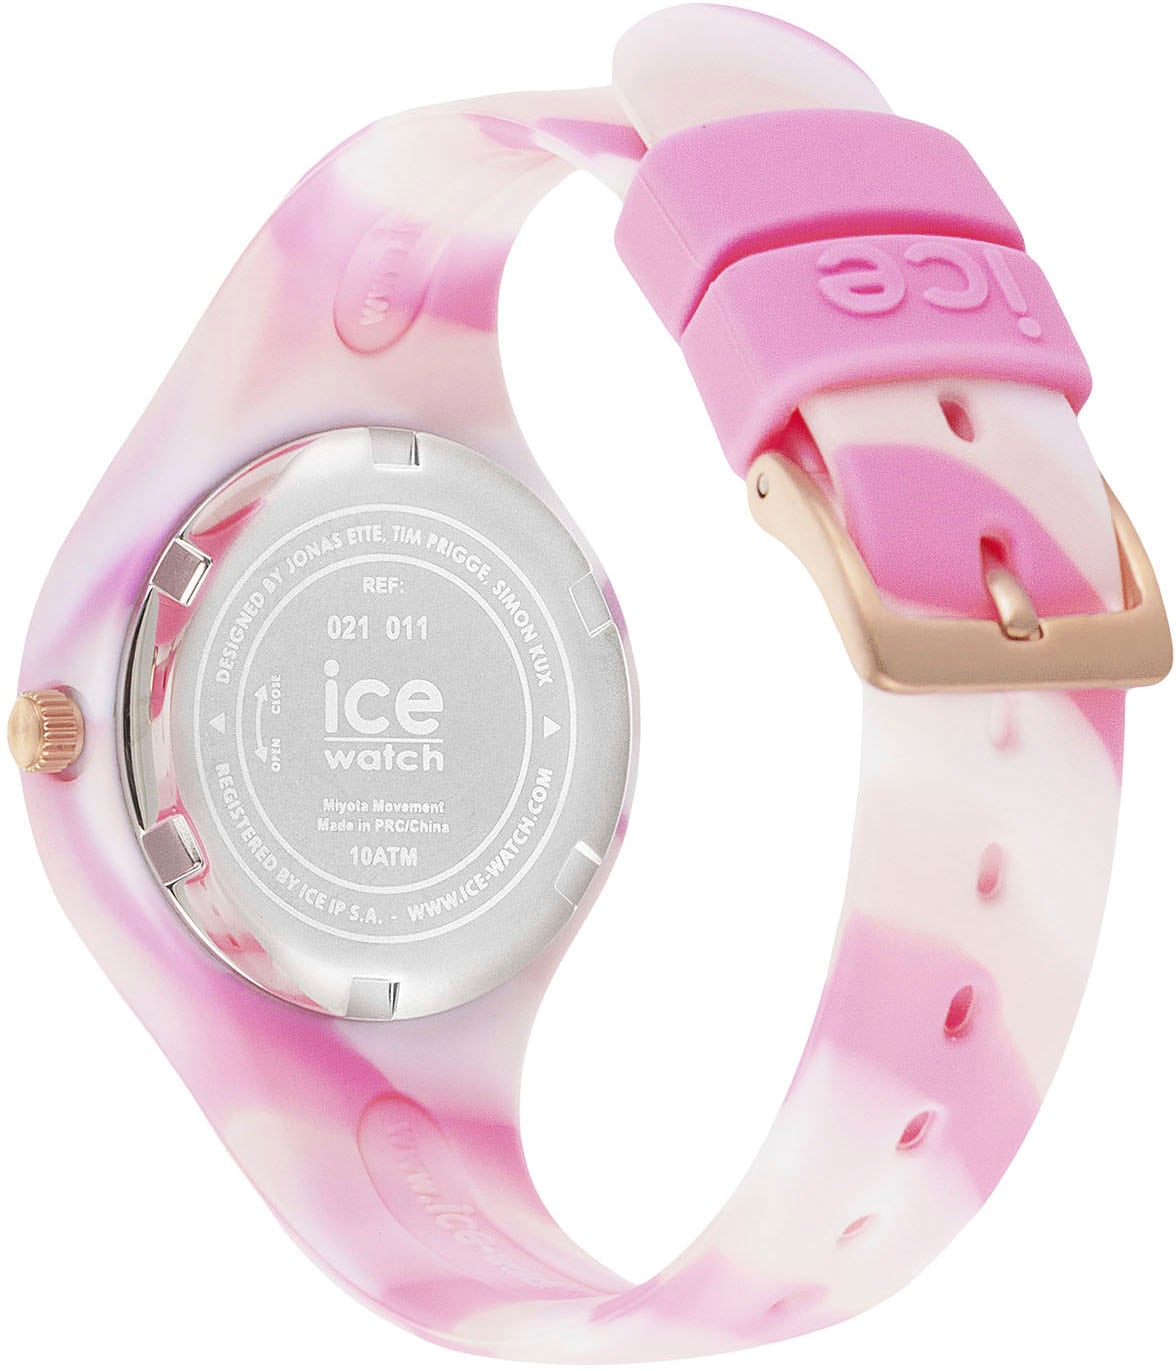 - ideal Quarzuhr dye 021011«, bei Geschenk 3H, - ♕ tie auch als - and »ICE shades Extra-Small Pink ice-watch